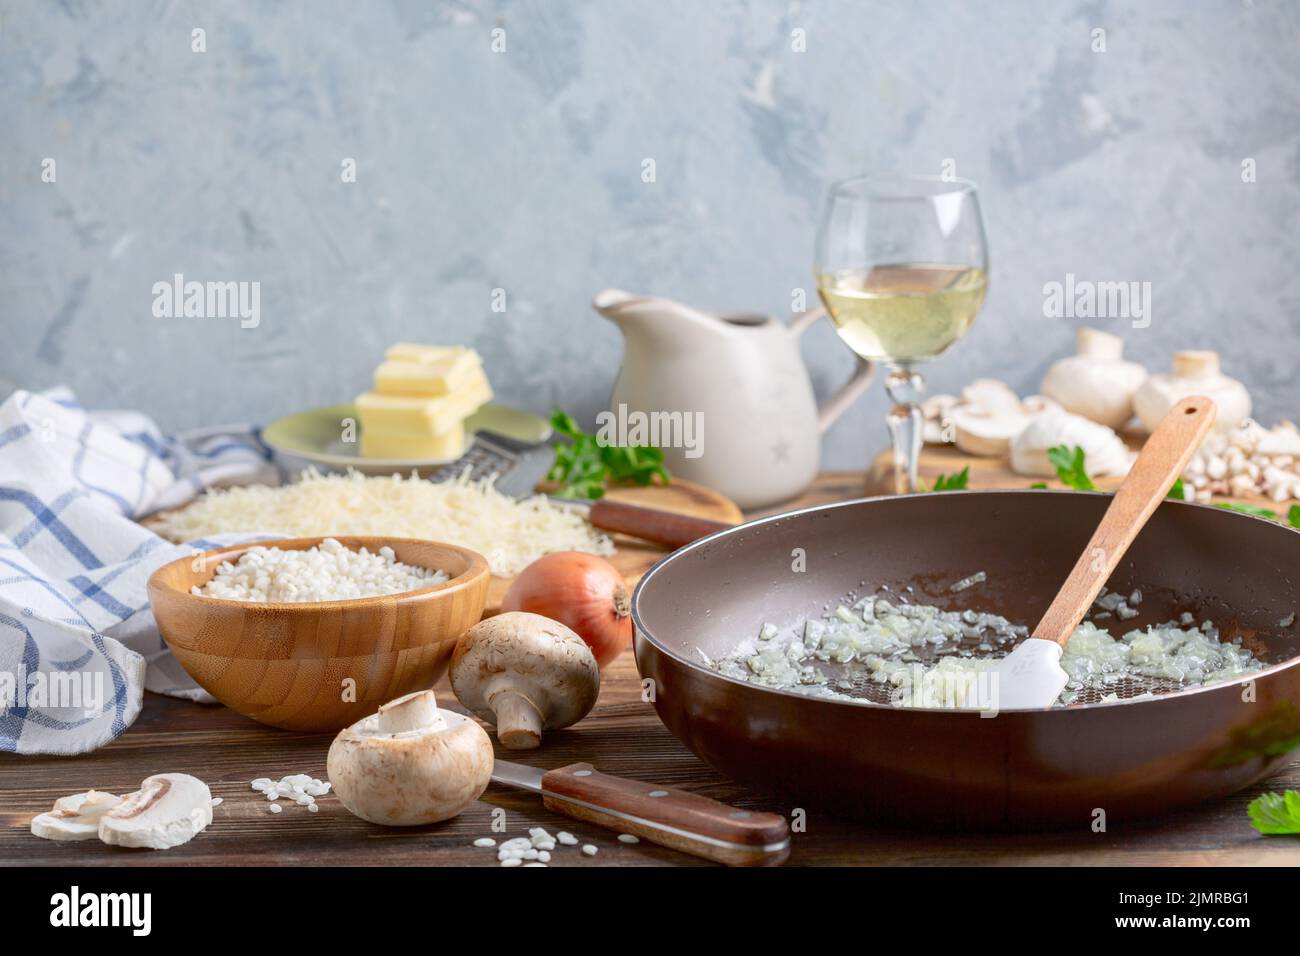 Kochen von Risotto mit Pilzen. Stockfoto